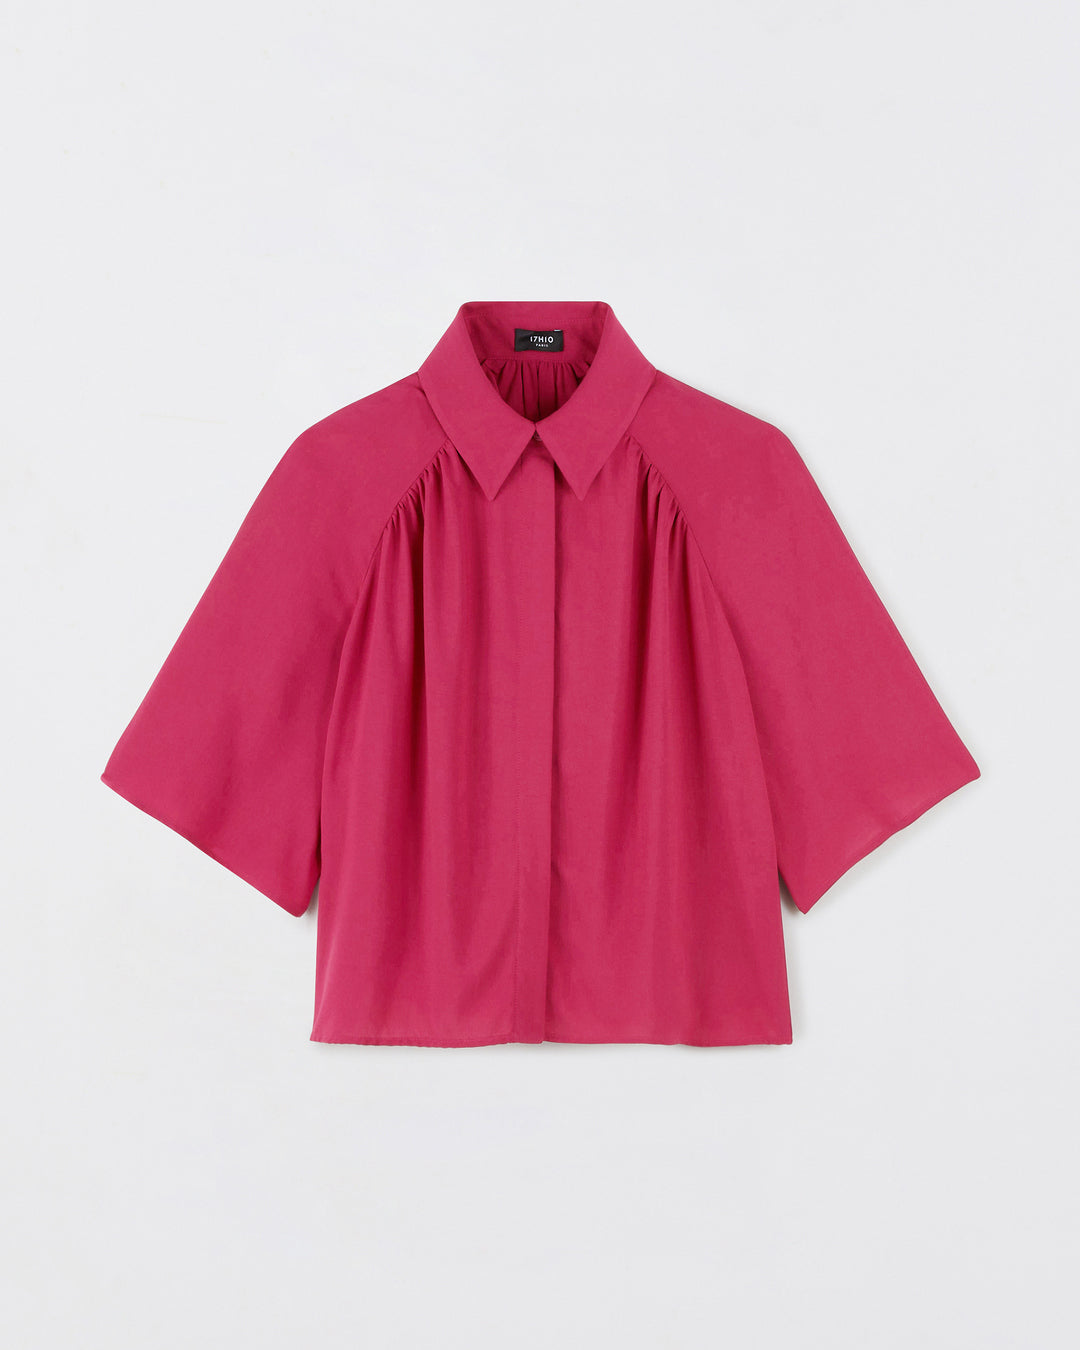 Dallas shirt - Raspberry